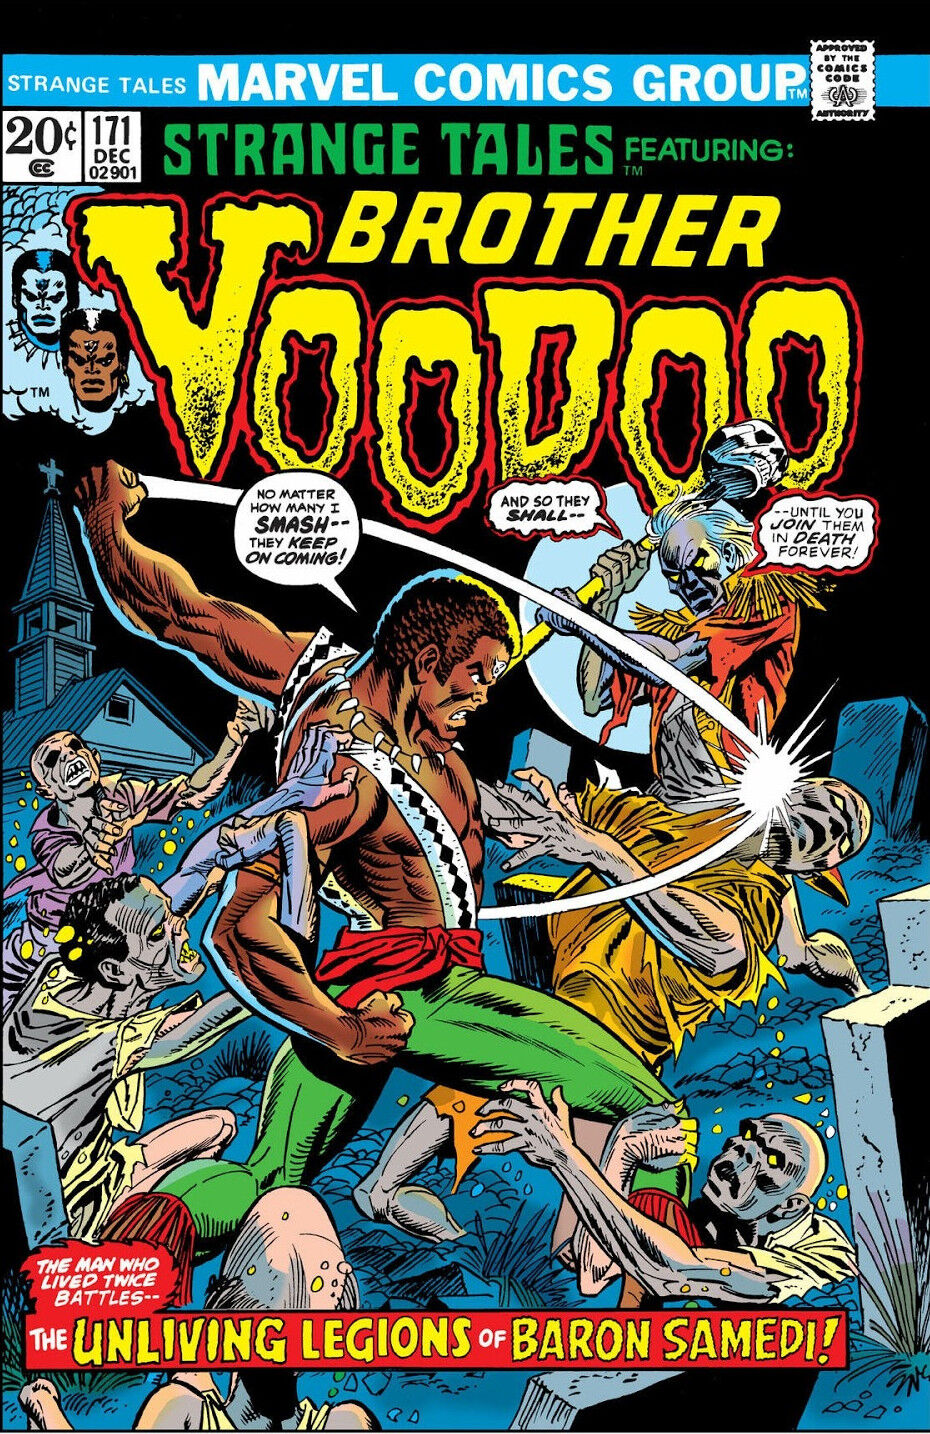 Strange Tales Featuring: Brother Voodoo Volume 1 #171